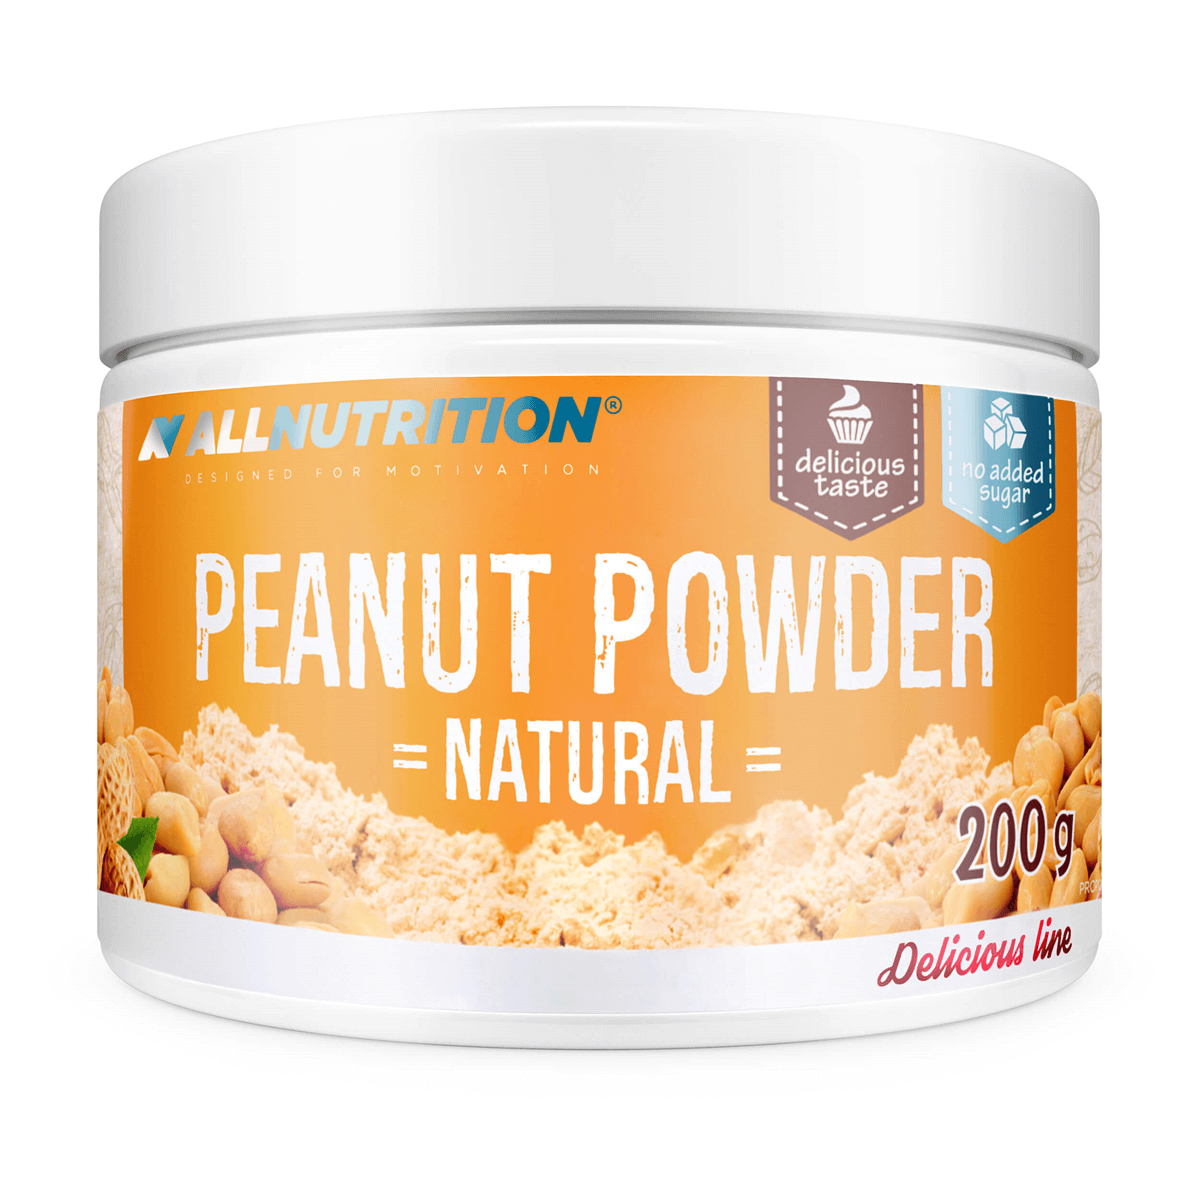 Peanut Powder